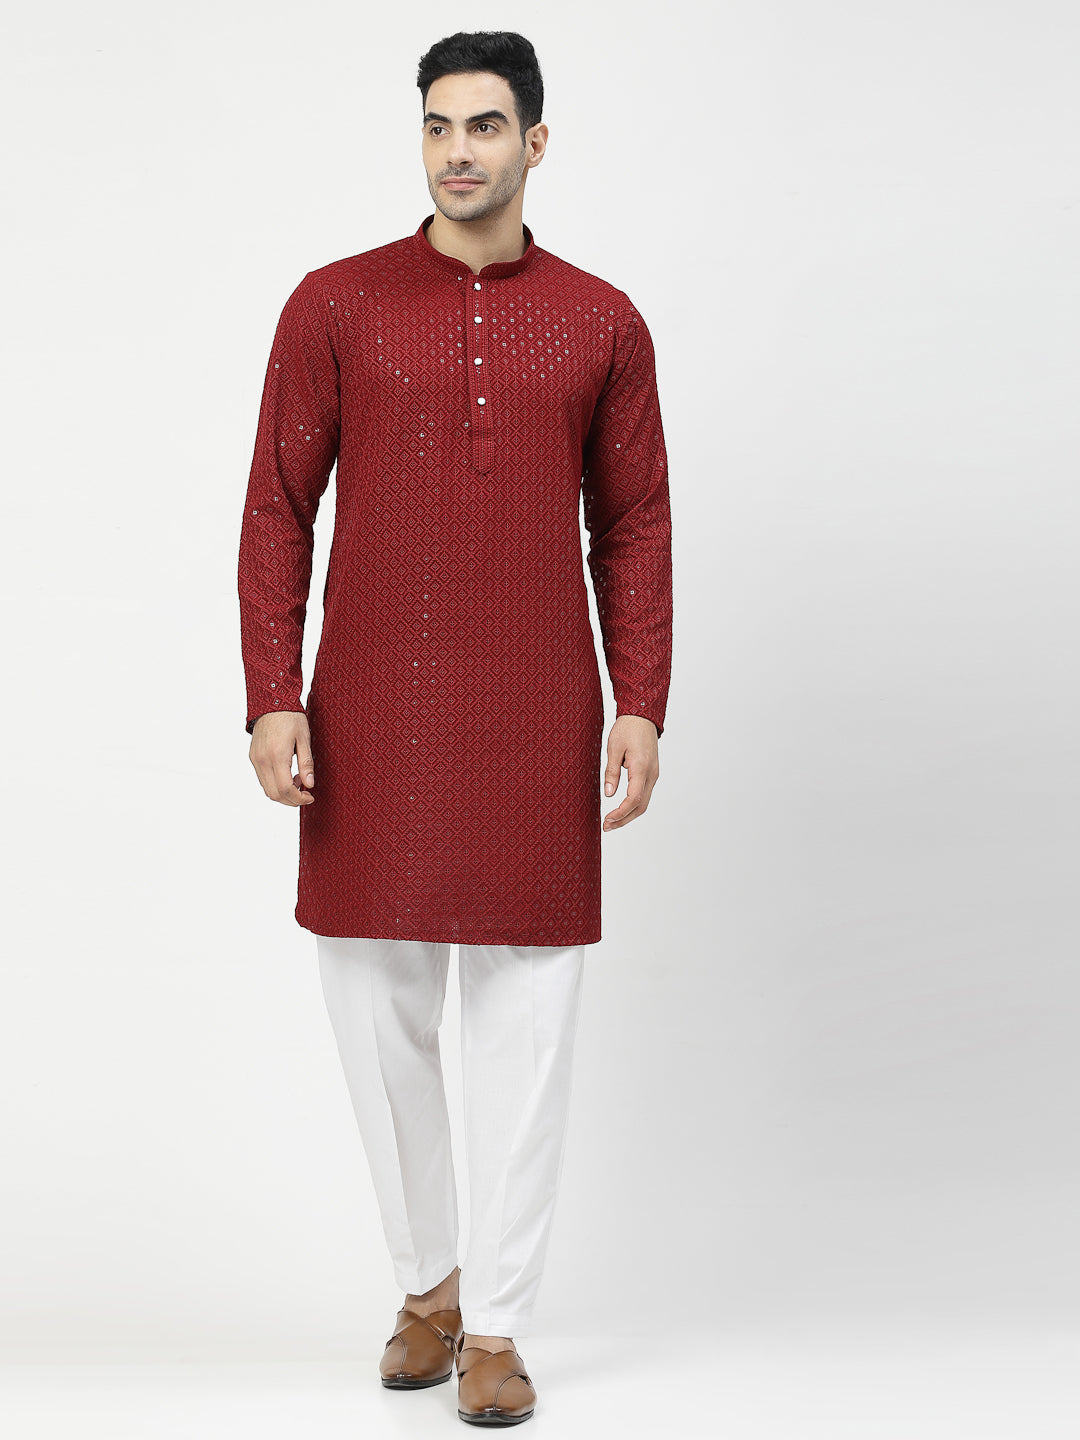 Men's Embroidery Cotton Blend Chikankari Kurta Set with White Pyjama (Wine Color)